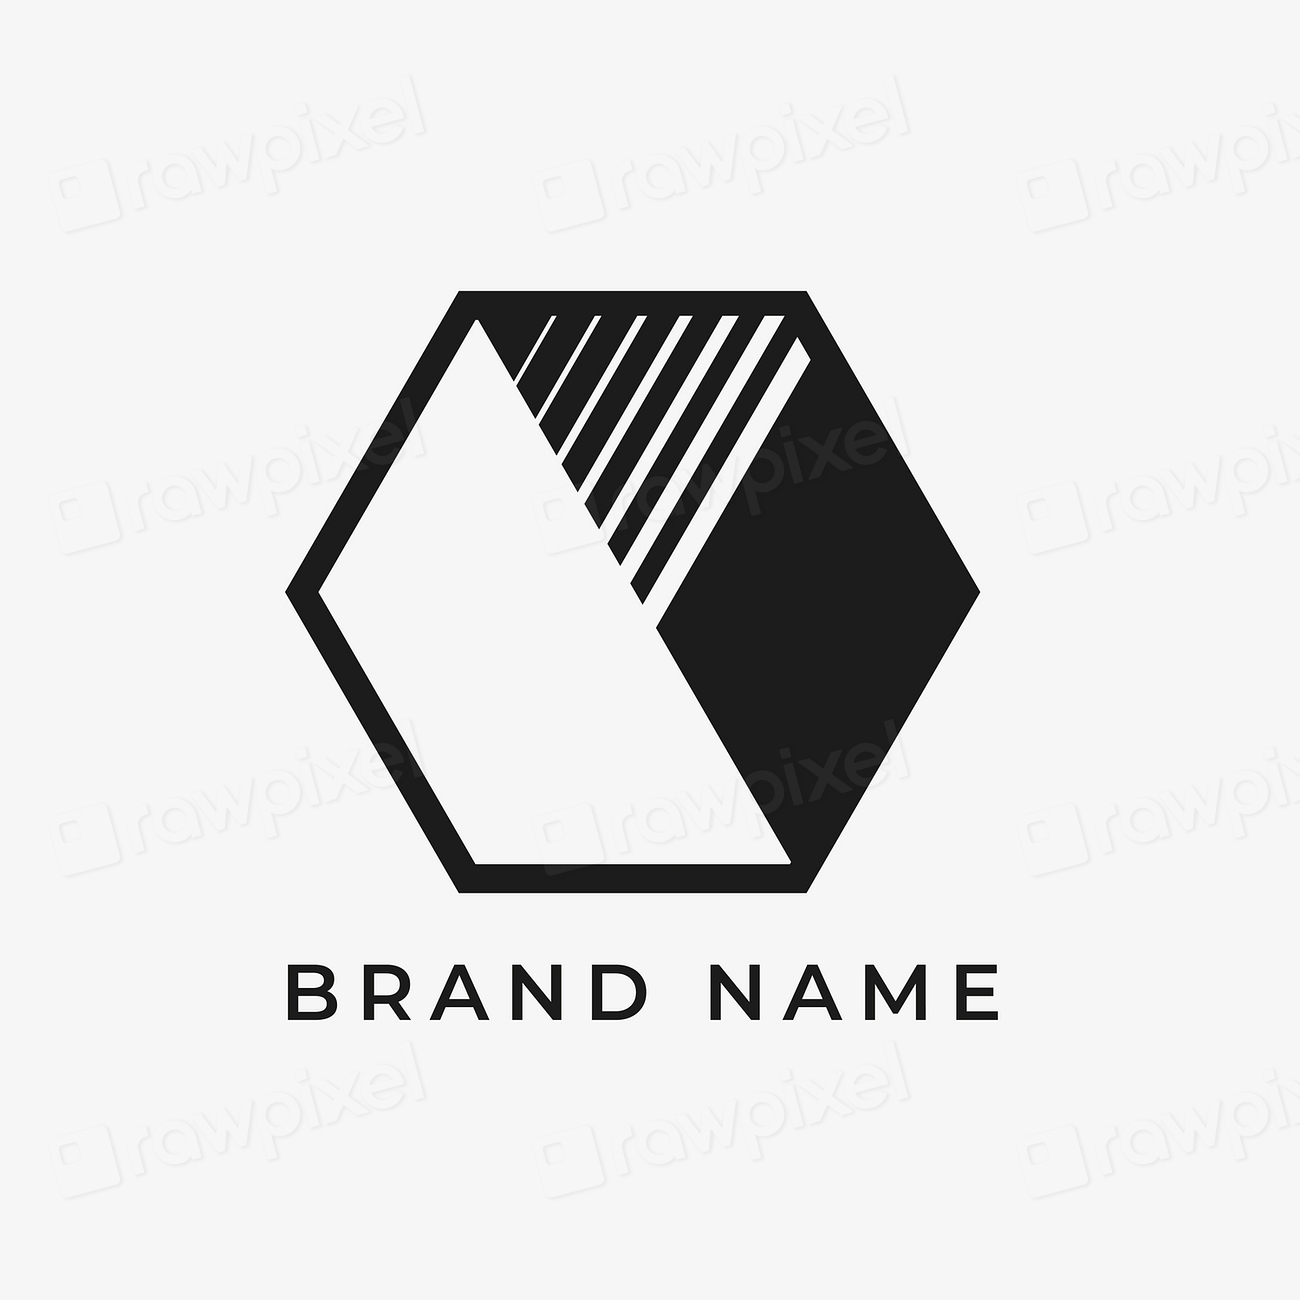 Company branding logo design vector | Premium Vector - rawpixel